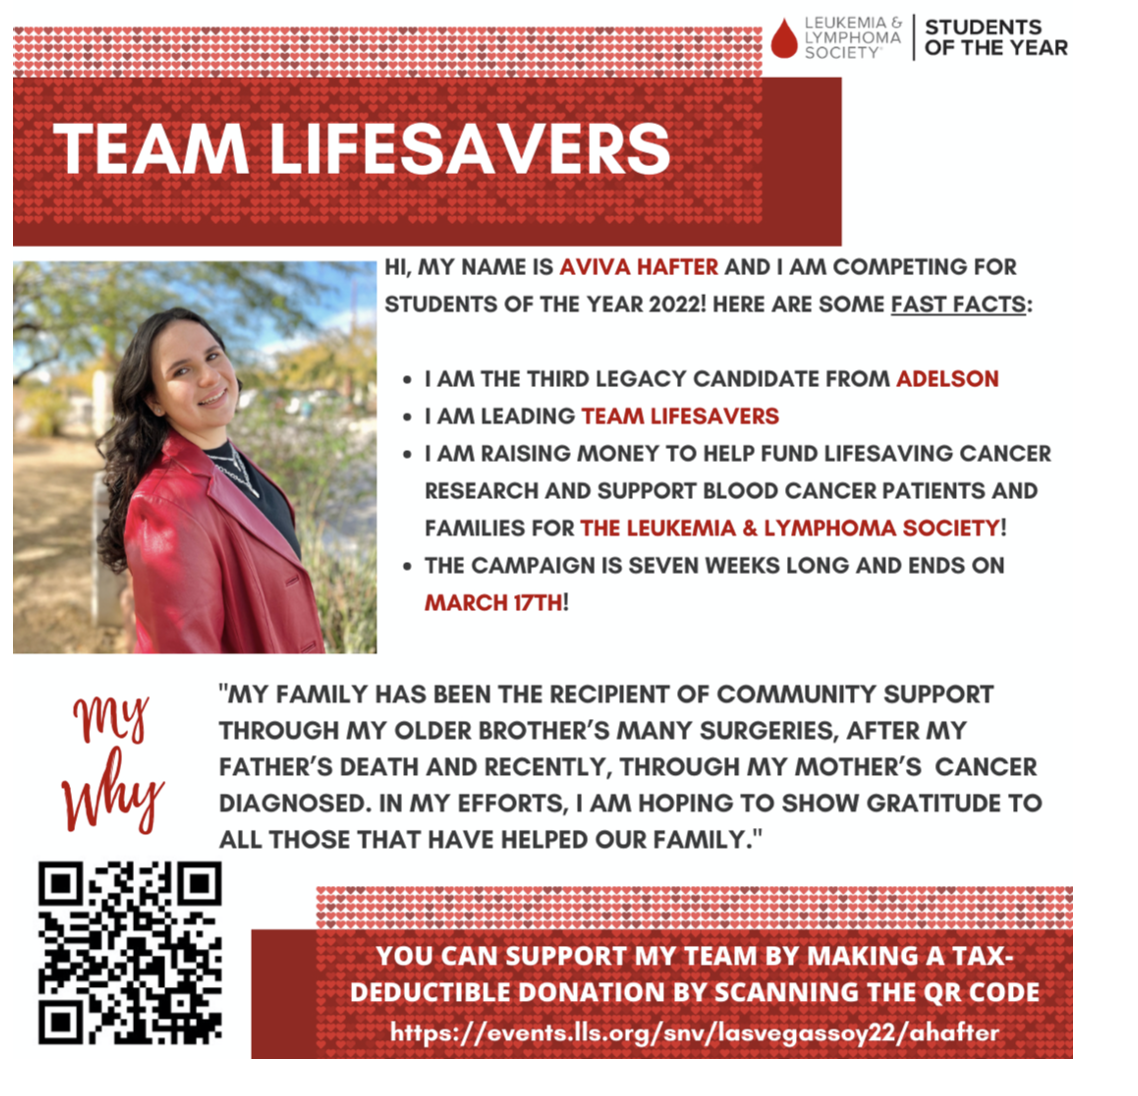 Lifesavers program